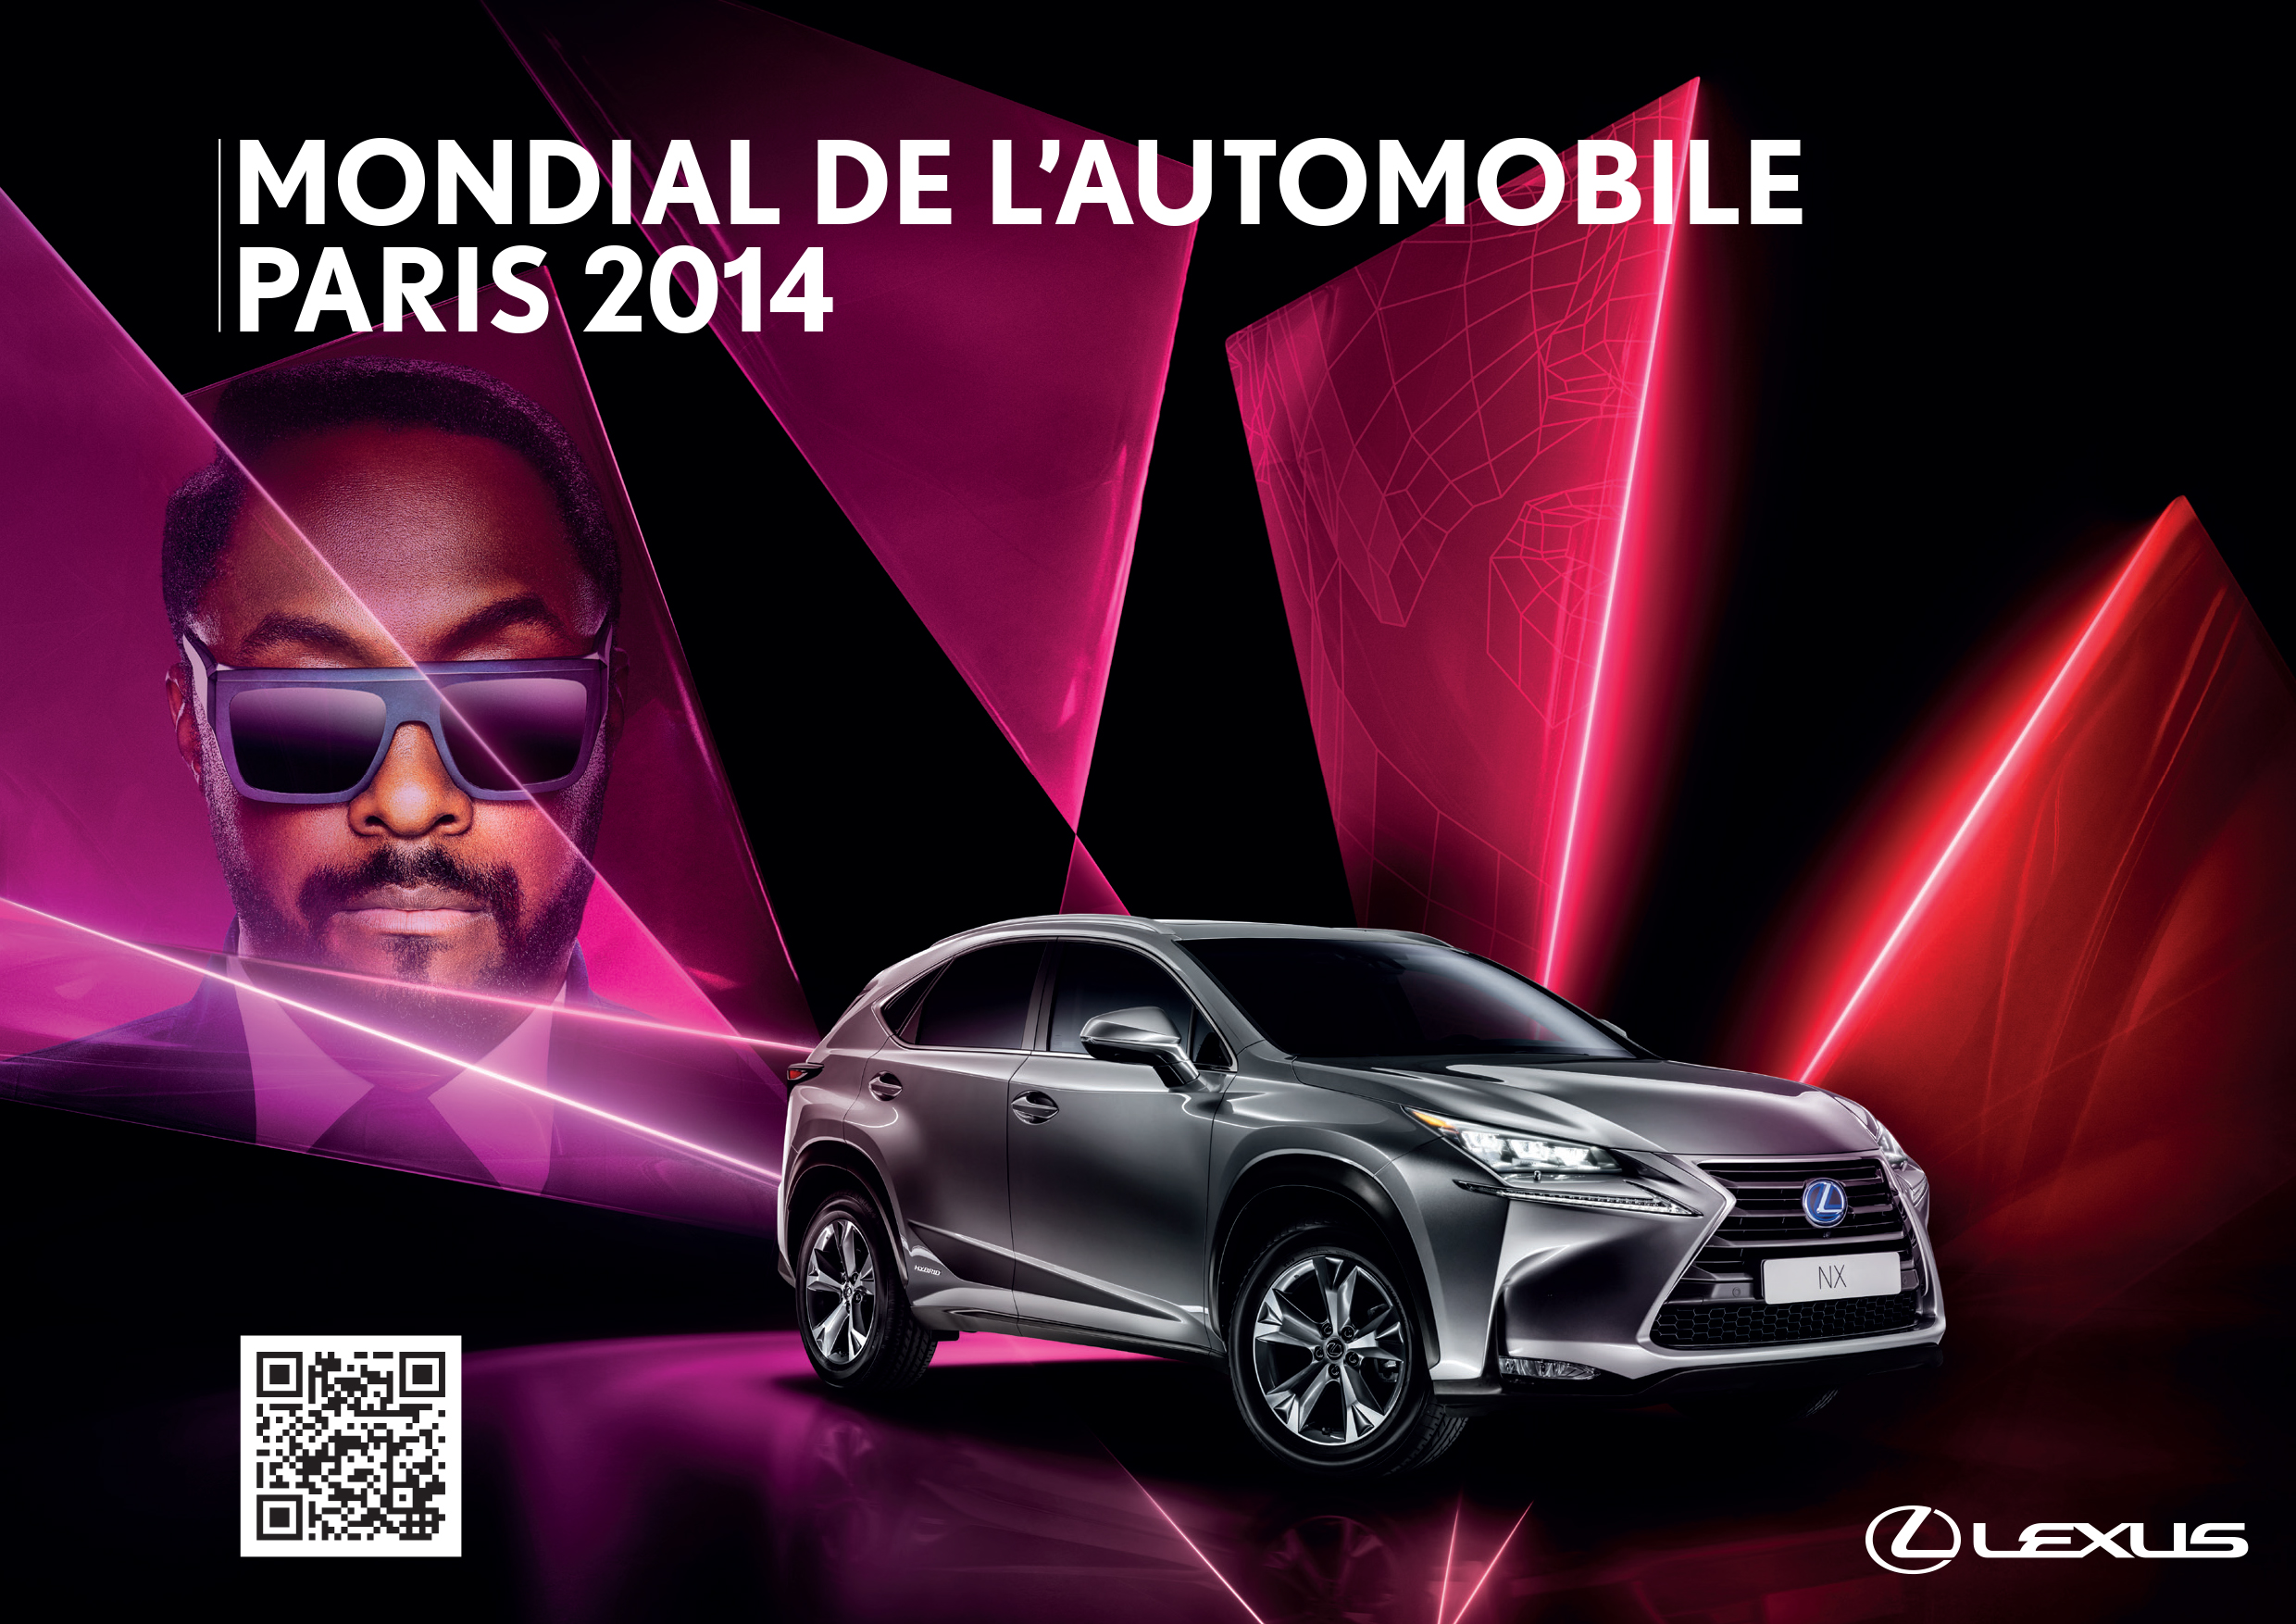  Lancio Europeo del nuovo mid-size SUV Lexus NX al motor show di Parigi